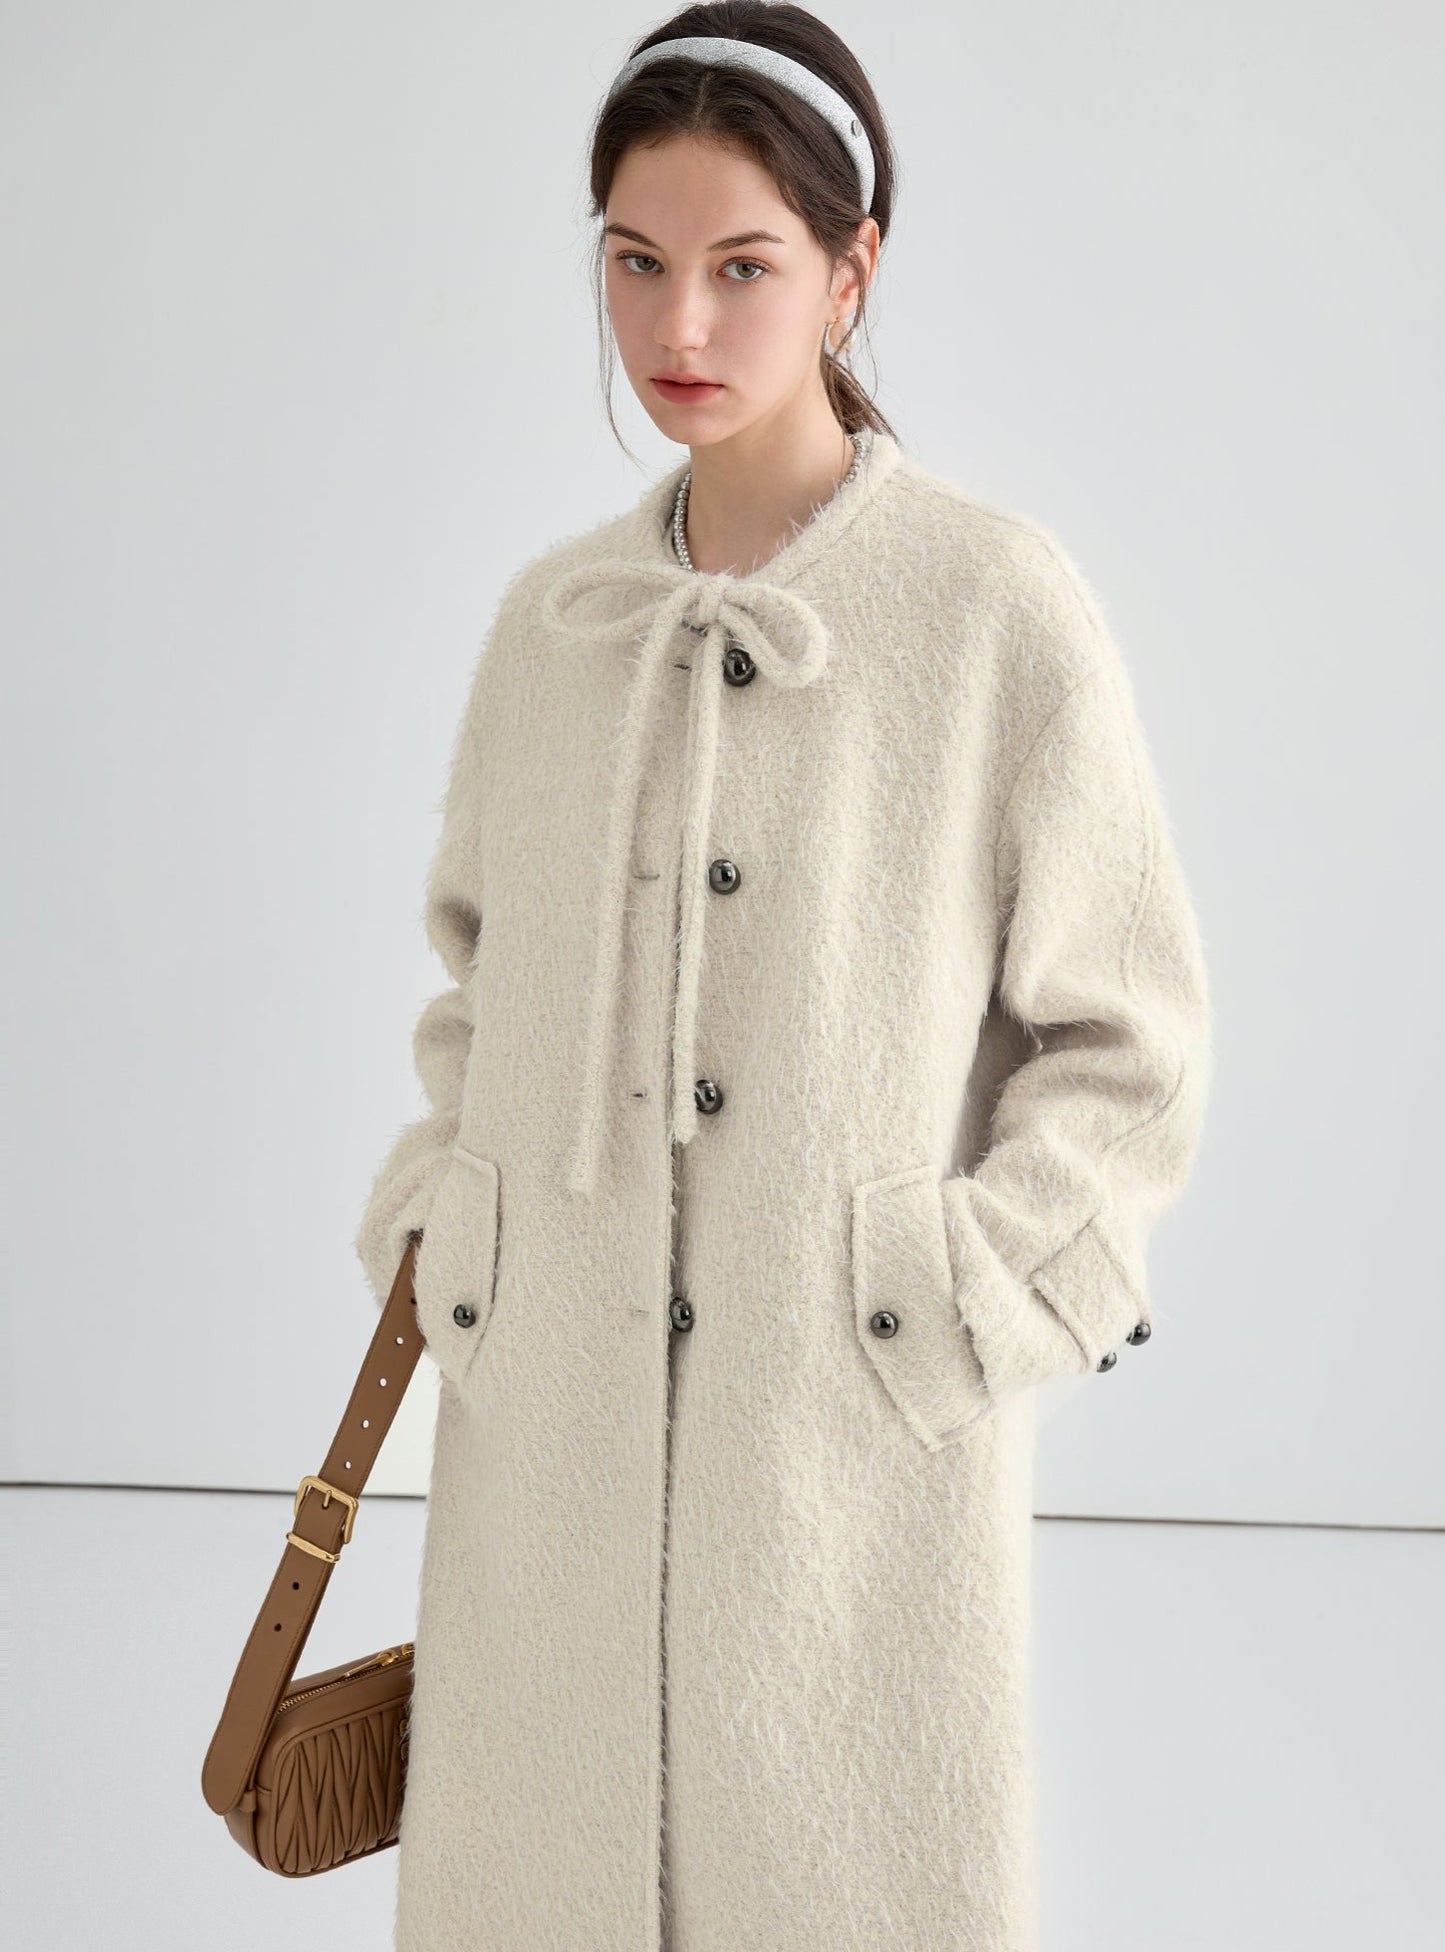 French wool tweed coat